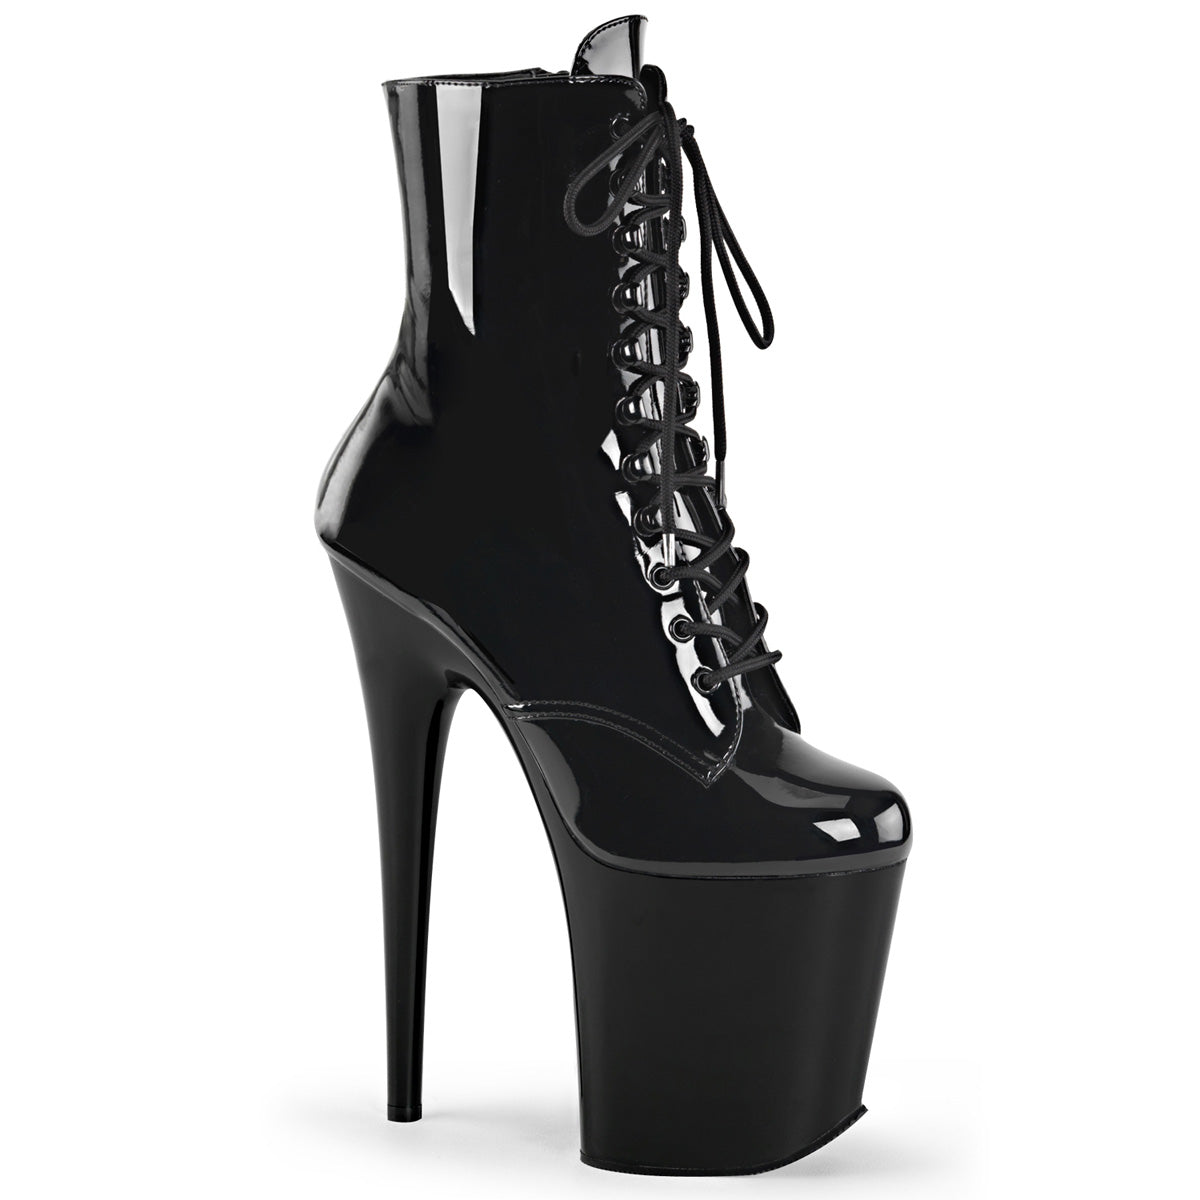 FLAMINGO-1020 Black Patent 8 Inch Heel Boots